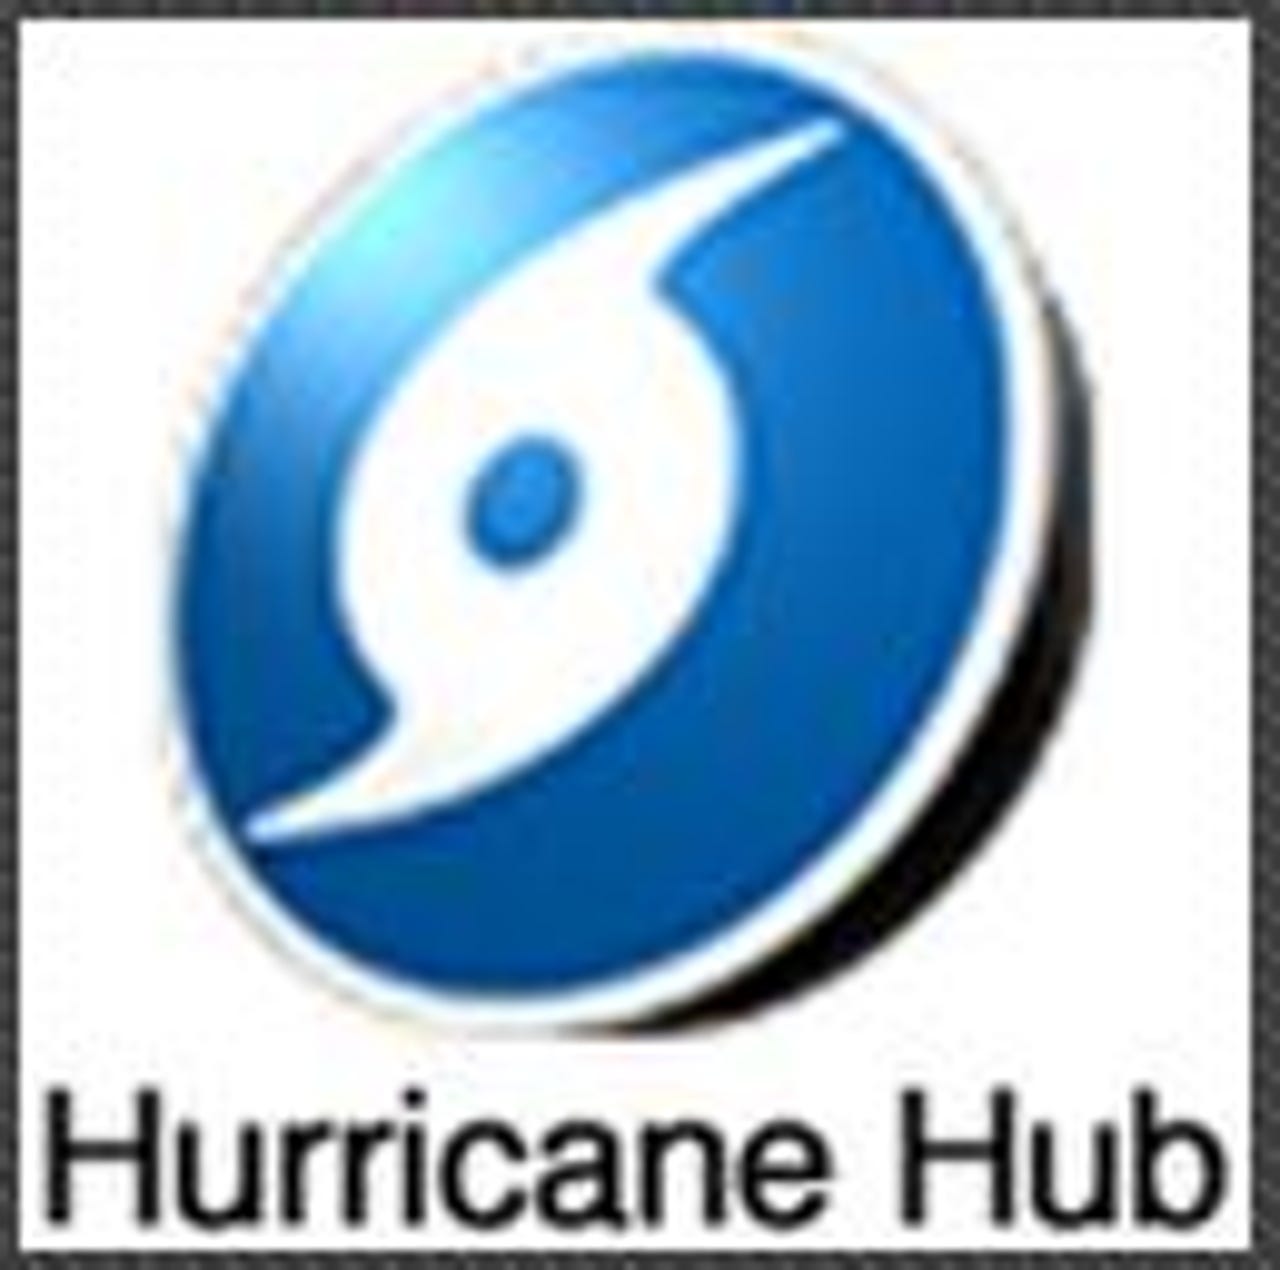 hurricanehub-jpg.jpg